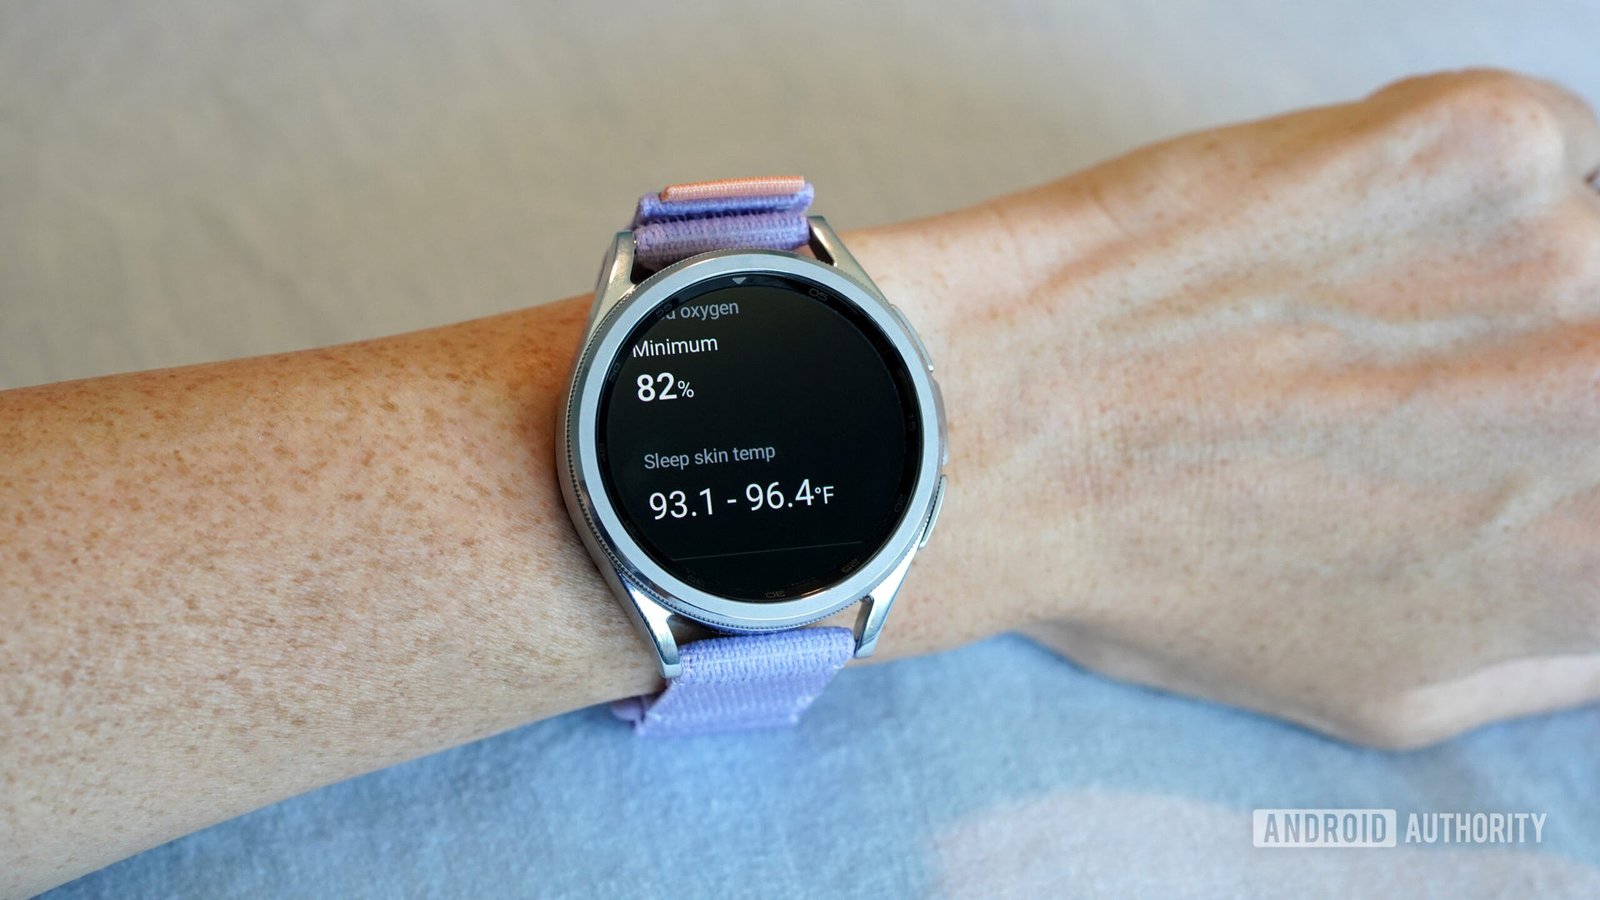 Samsung Galaxy Watch sleep apnea detection gets FDA approval